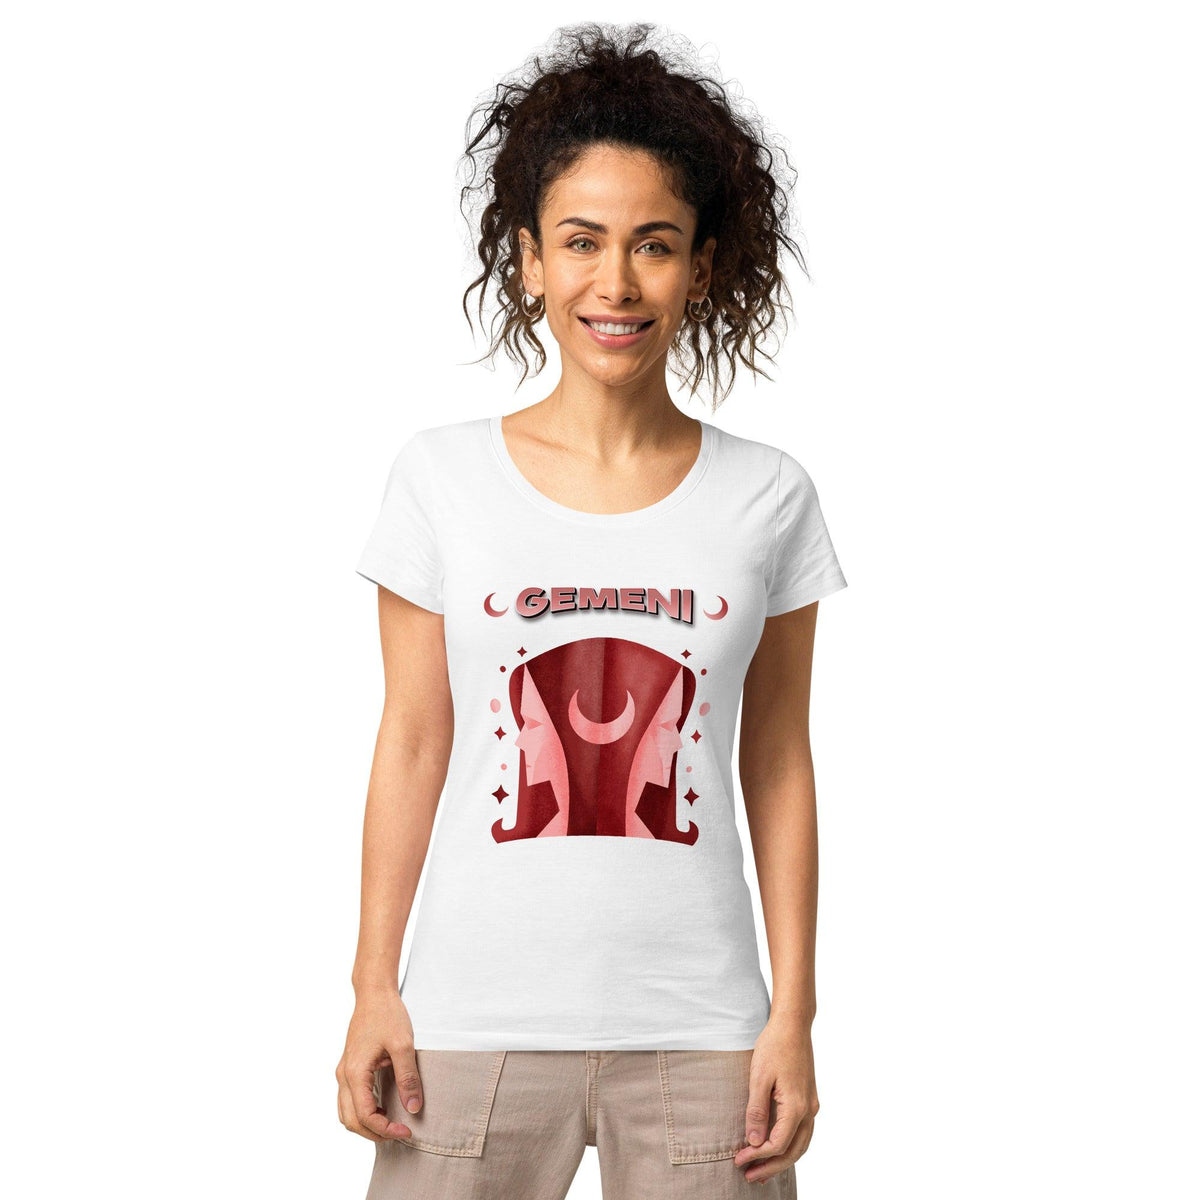 Gemini Women’s Basic Organic T-shirt | Zodiac Series 2 - Beyond T-shirts